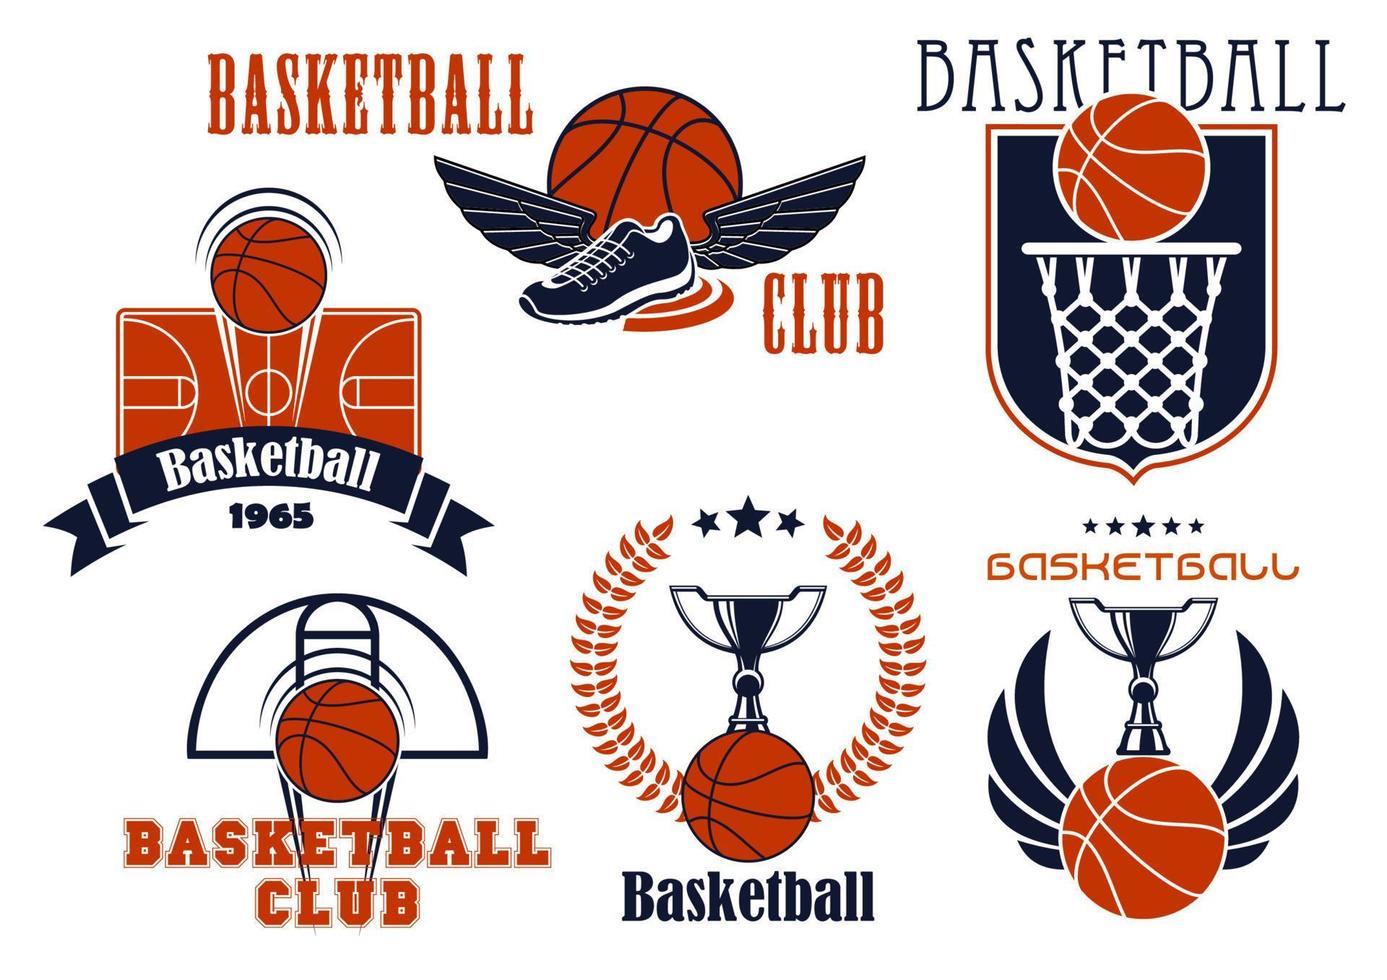 icônes de jeu de basket-ball avec des articles de sport vecteur